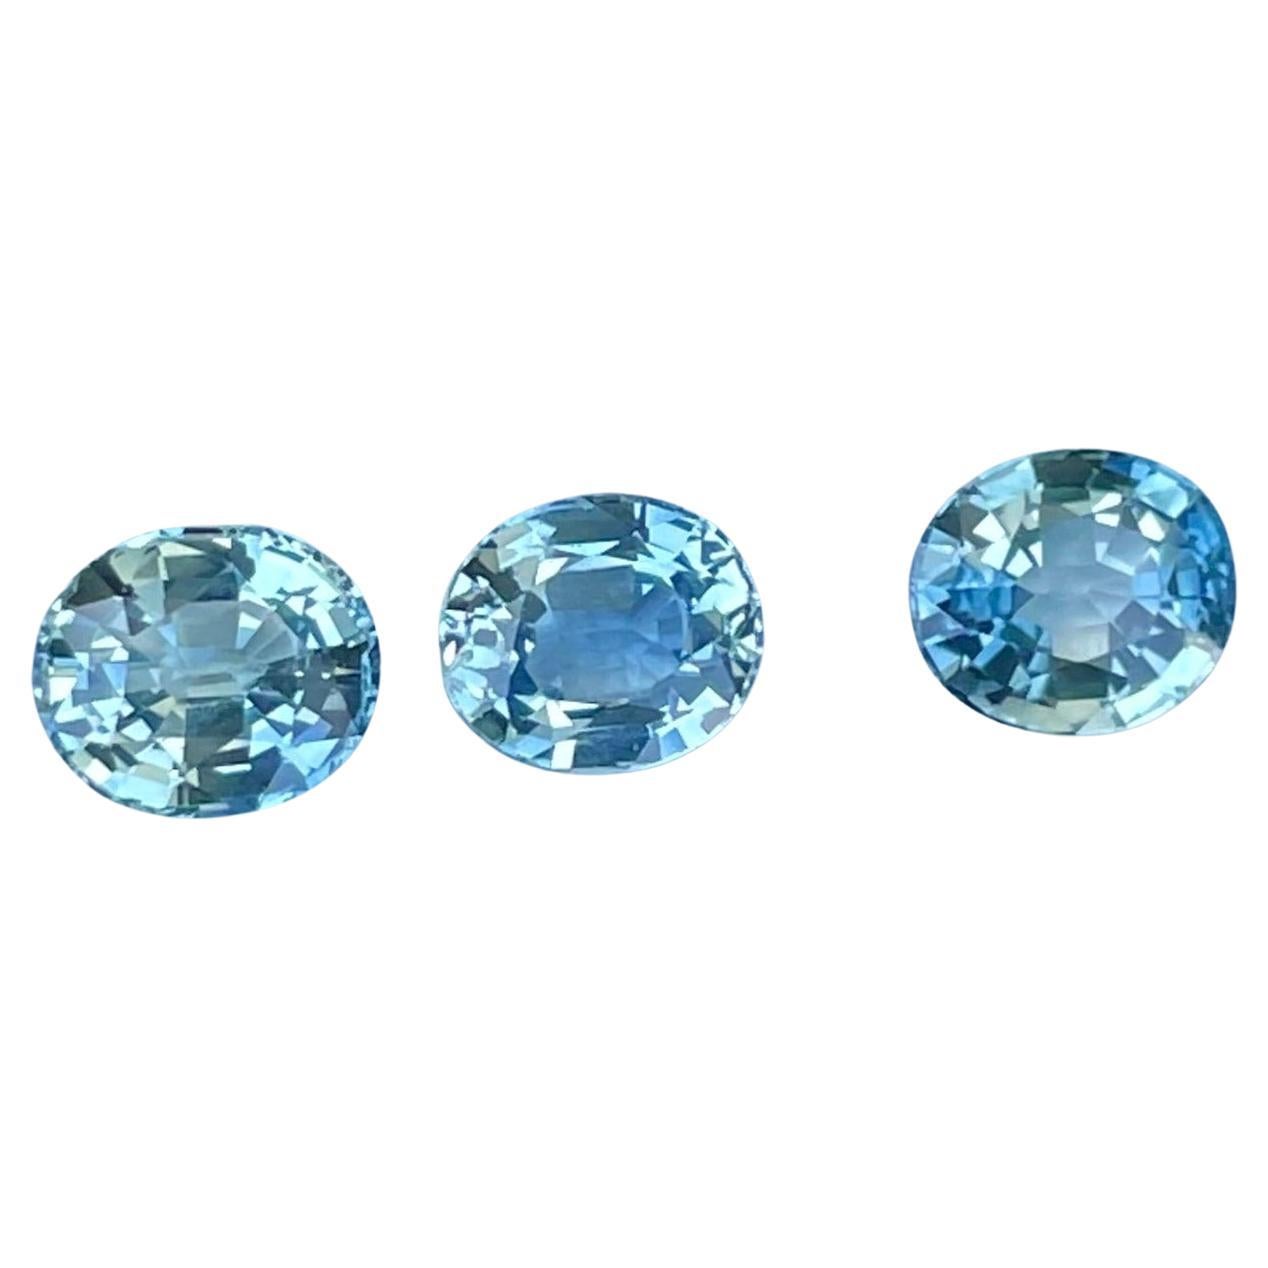 3.55 carats Blue Oval Cut Loose Sapphire Natural Gemstones Set from Sri Lanka